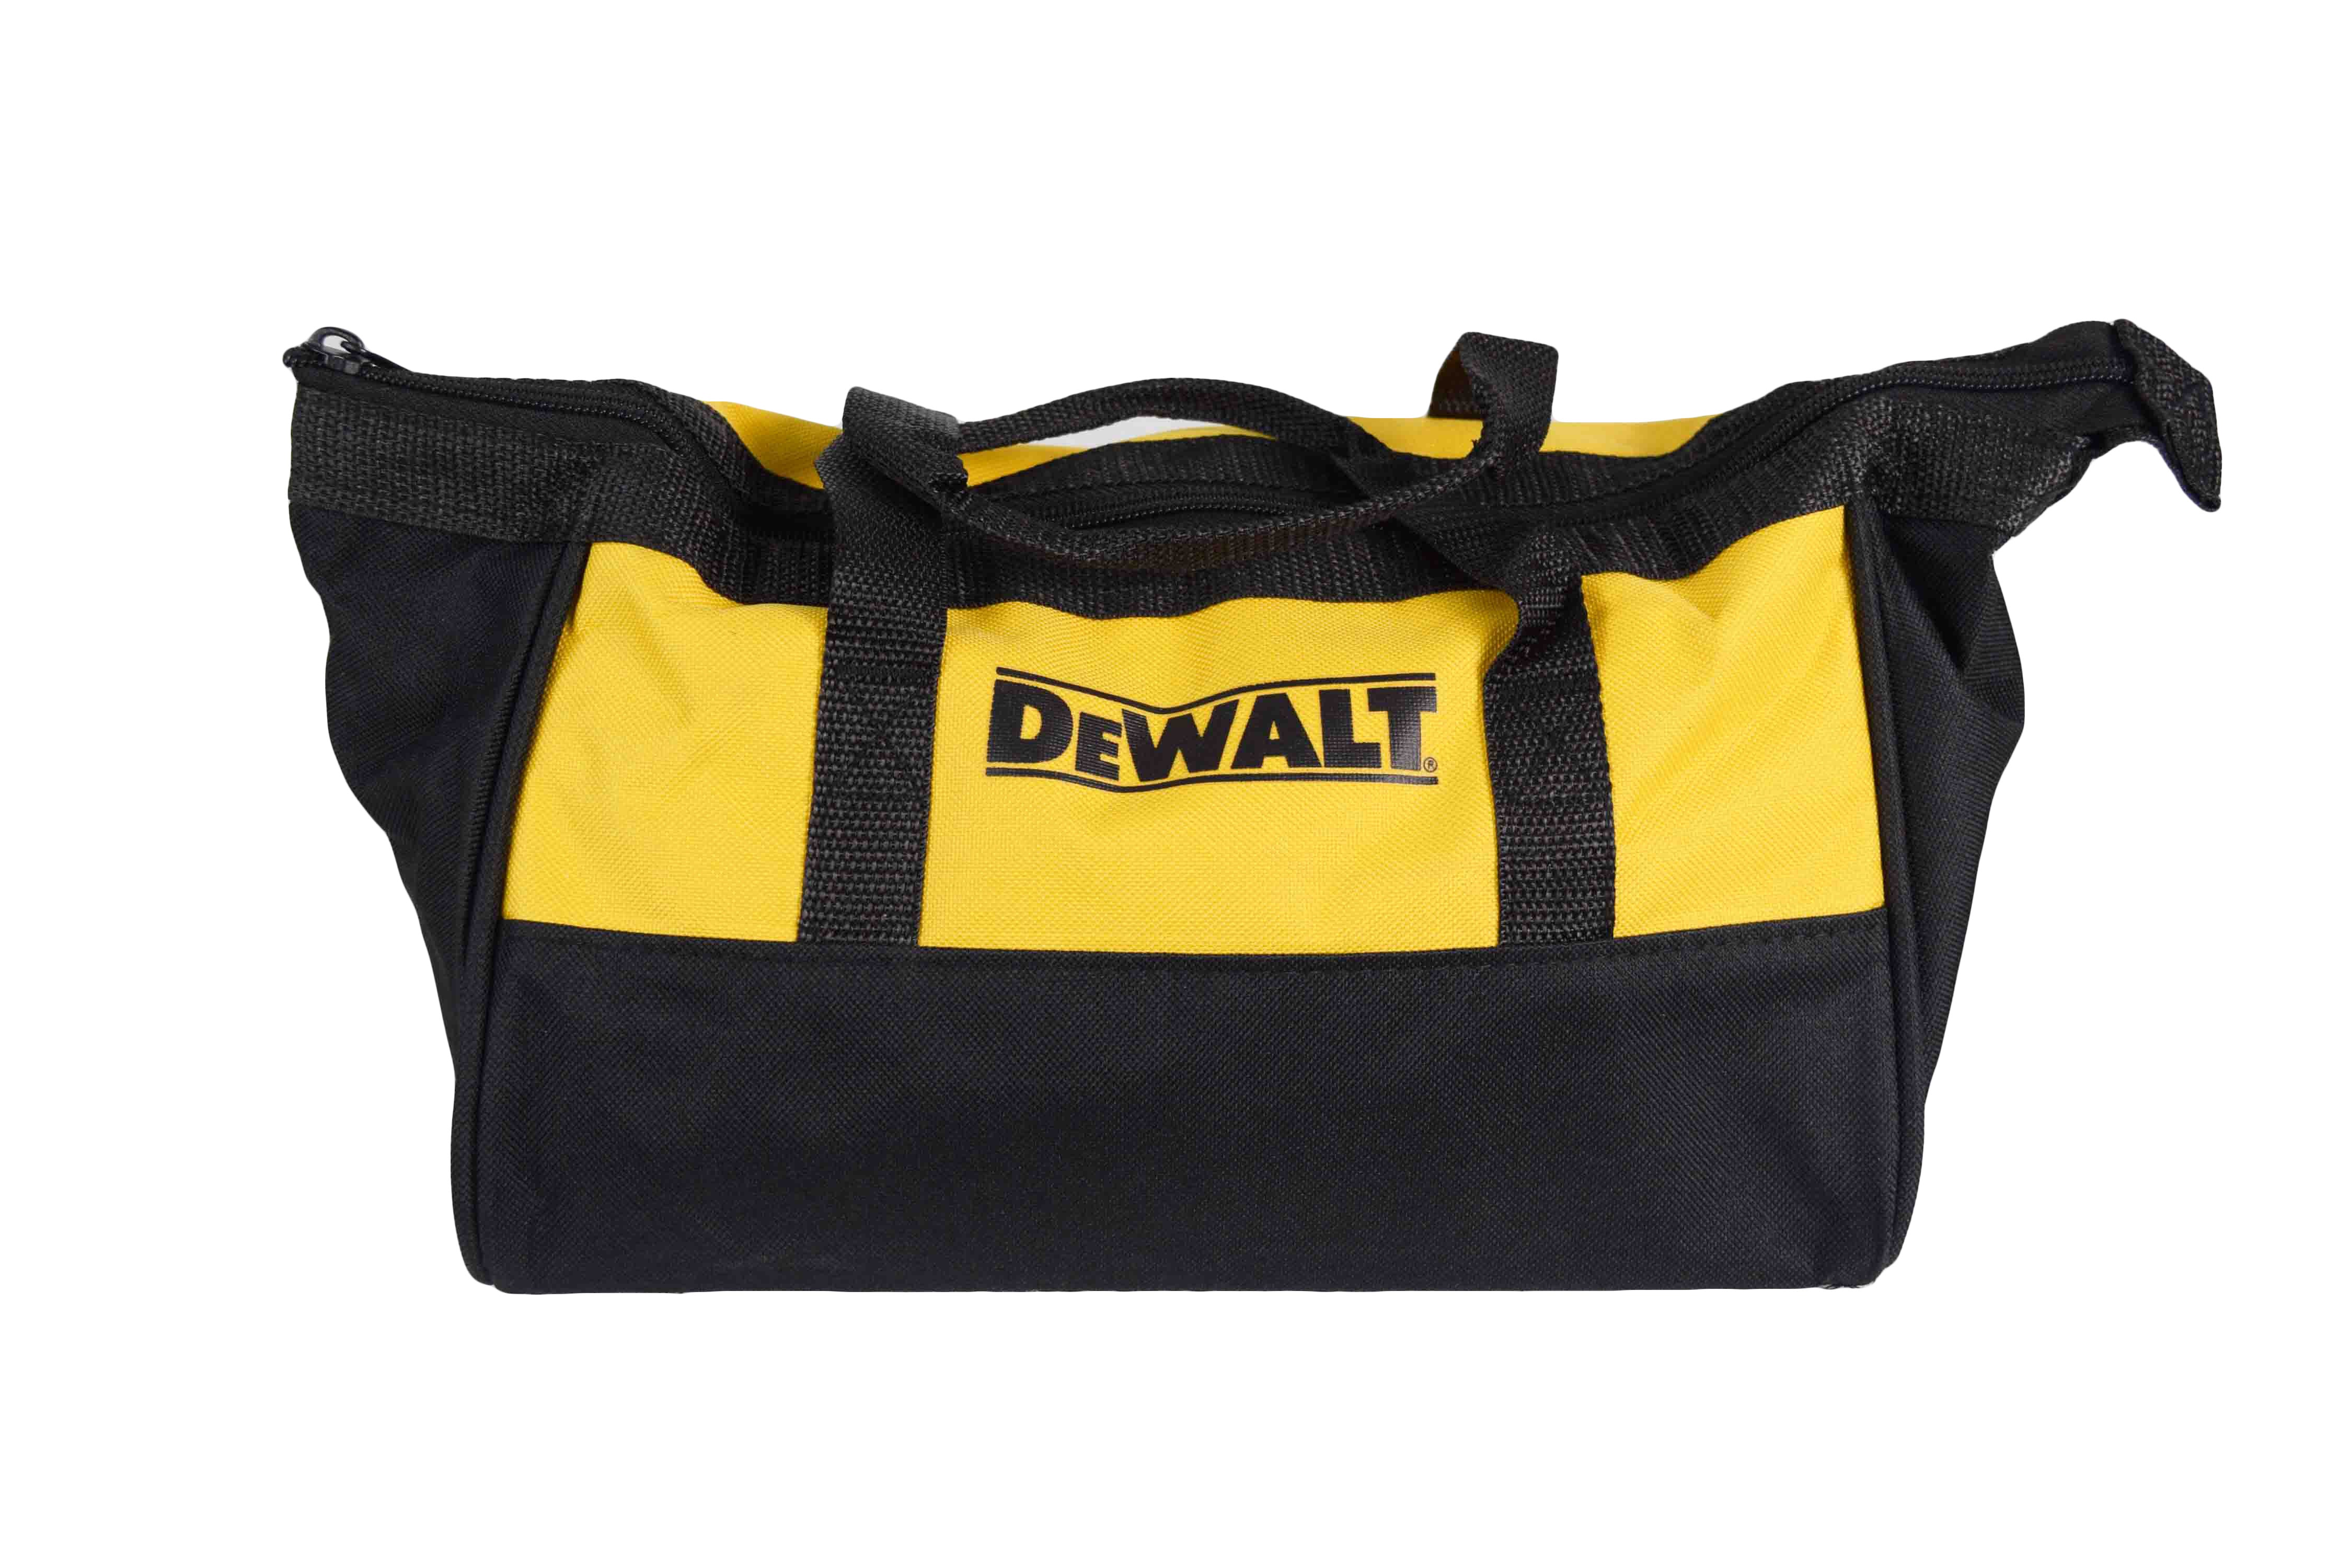 Dewalt-Bag15Dewalt-15-Tool-Bag-Nylon-With-Zipper-Closure-image-1